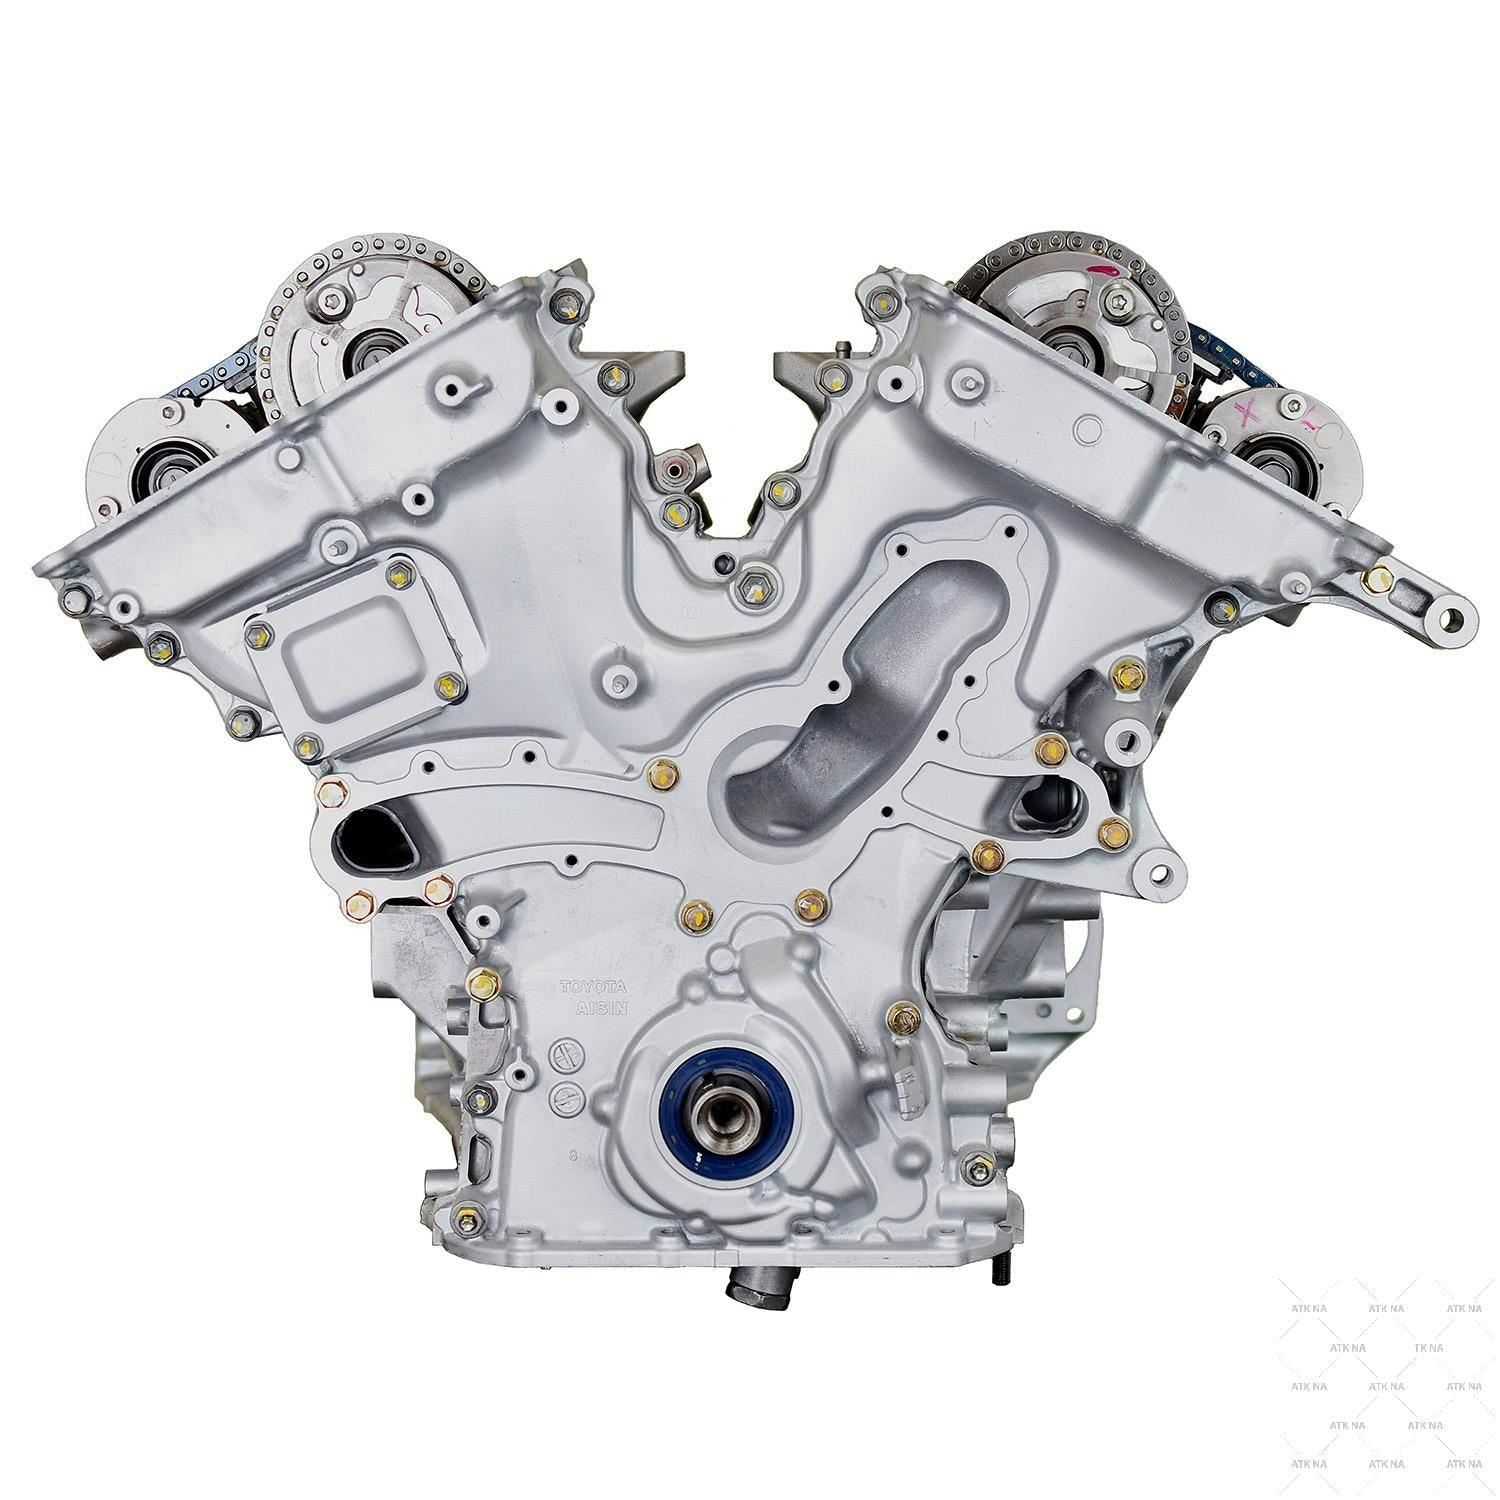 2.5L V6 Engine for 2006-2015 Lexus IS250